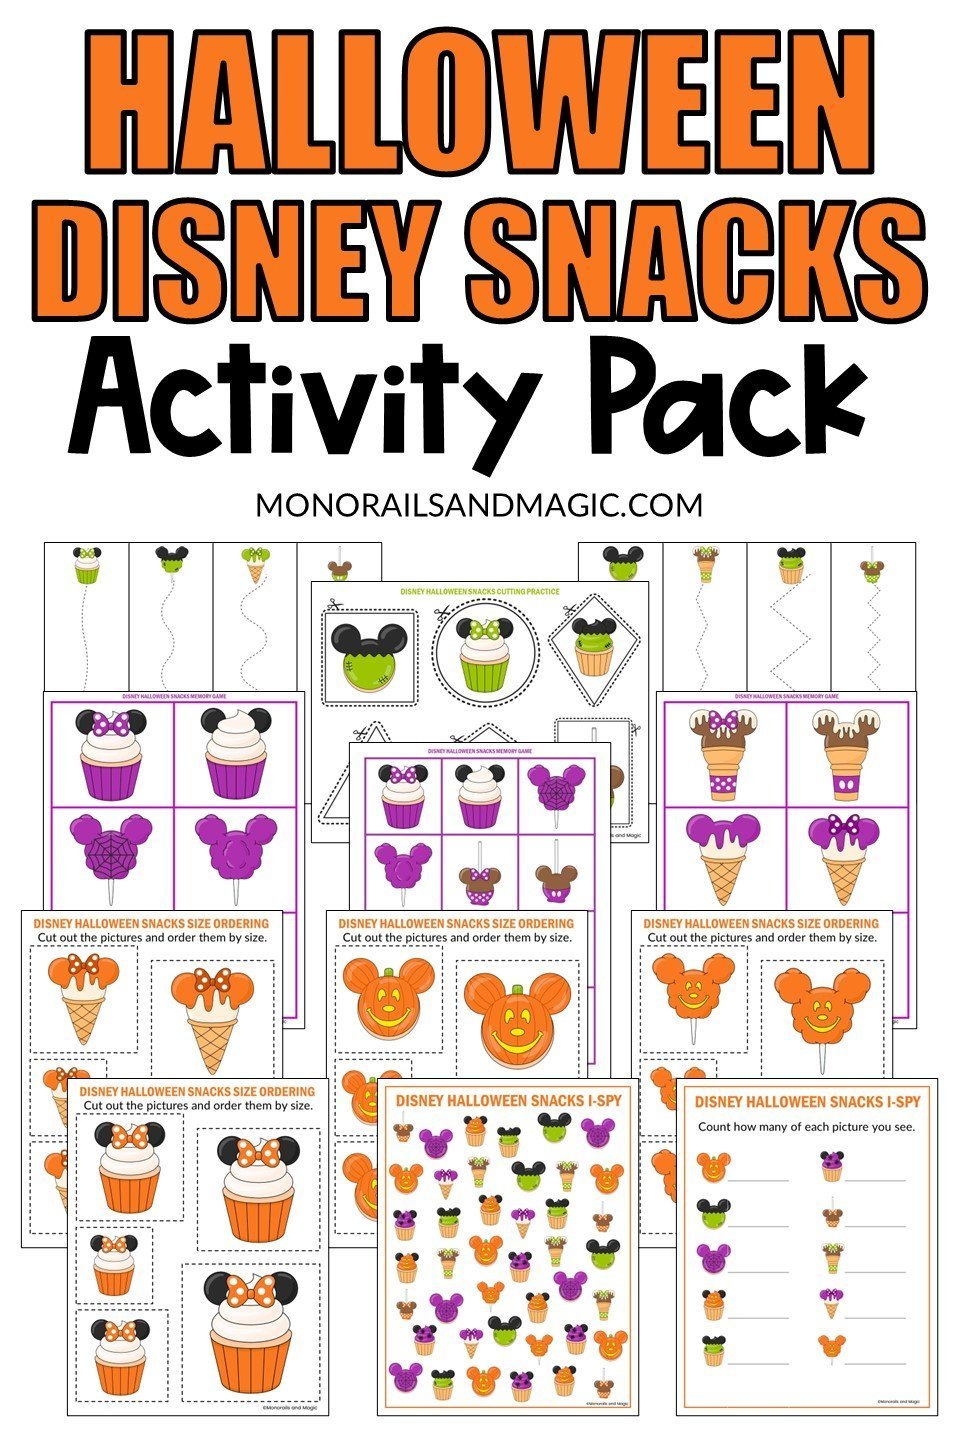 Printable Disney Halloween snacks mini activity pack for kids.